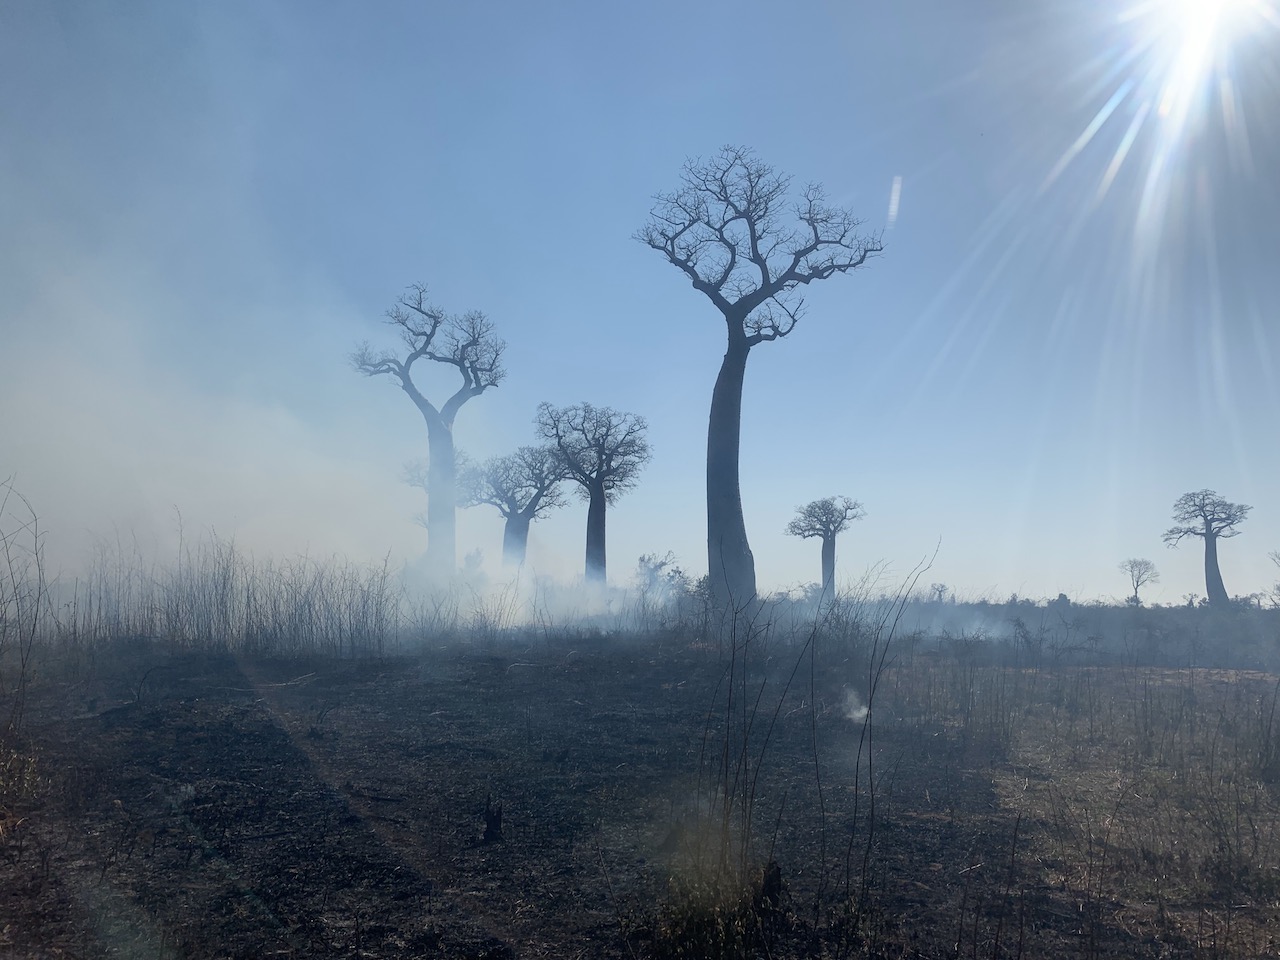 Baobabs in burning fields